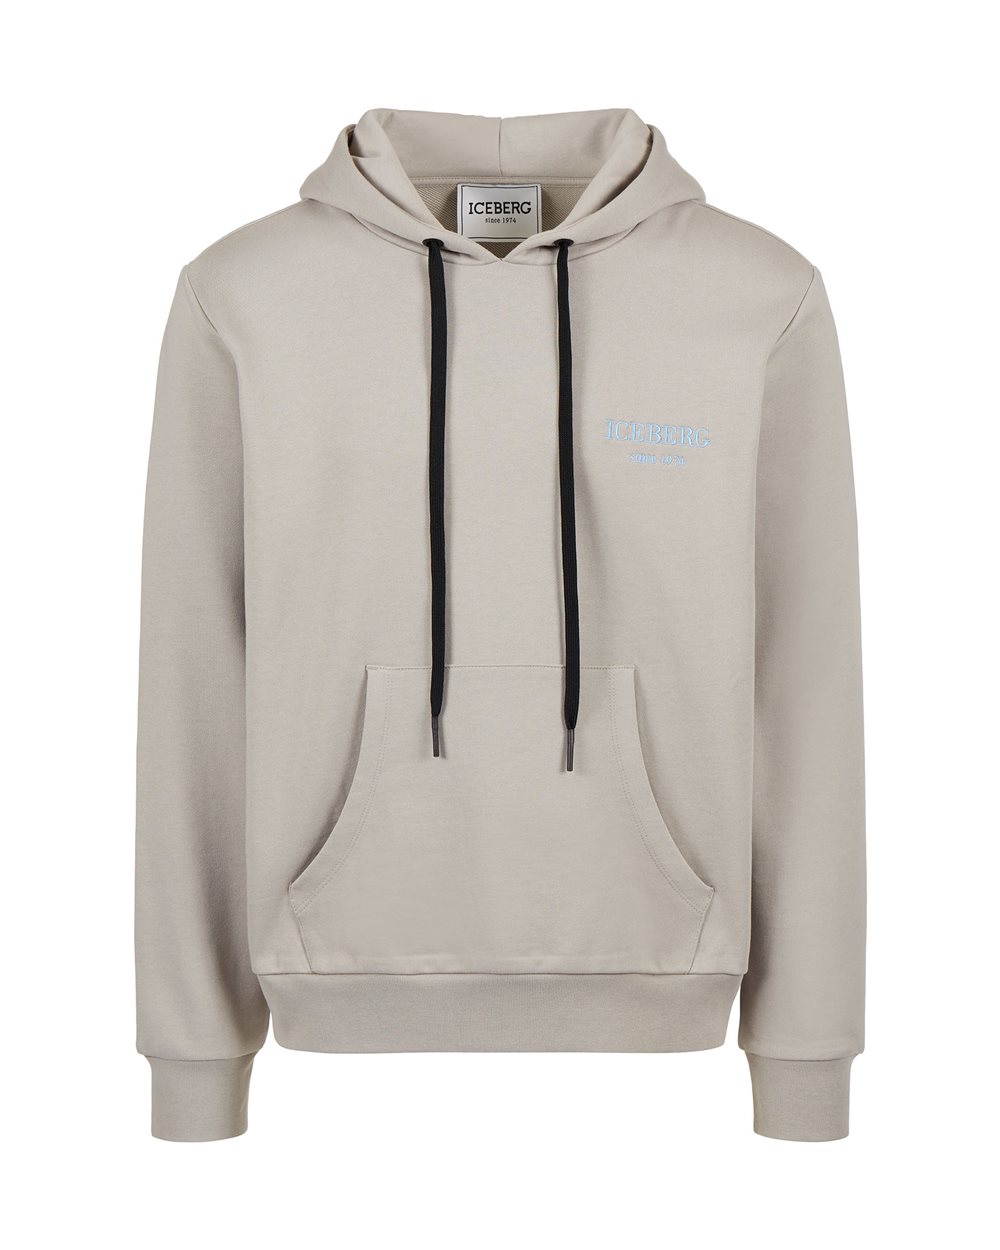 Hoodie sweatshirt with logo - PREVIEW | Iceberg - Official Website